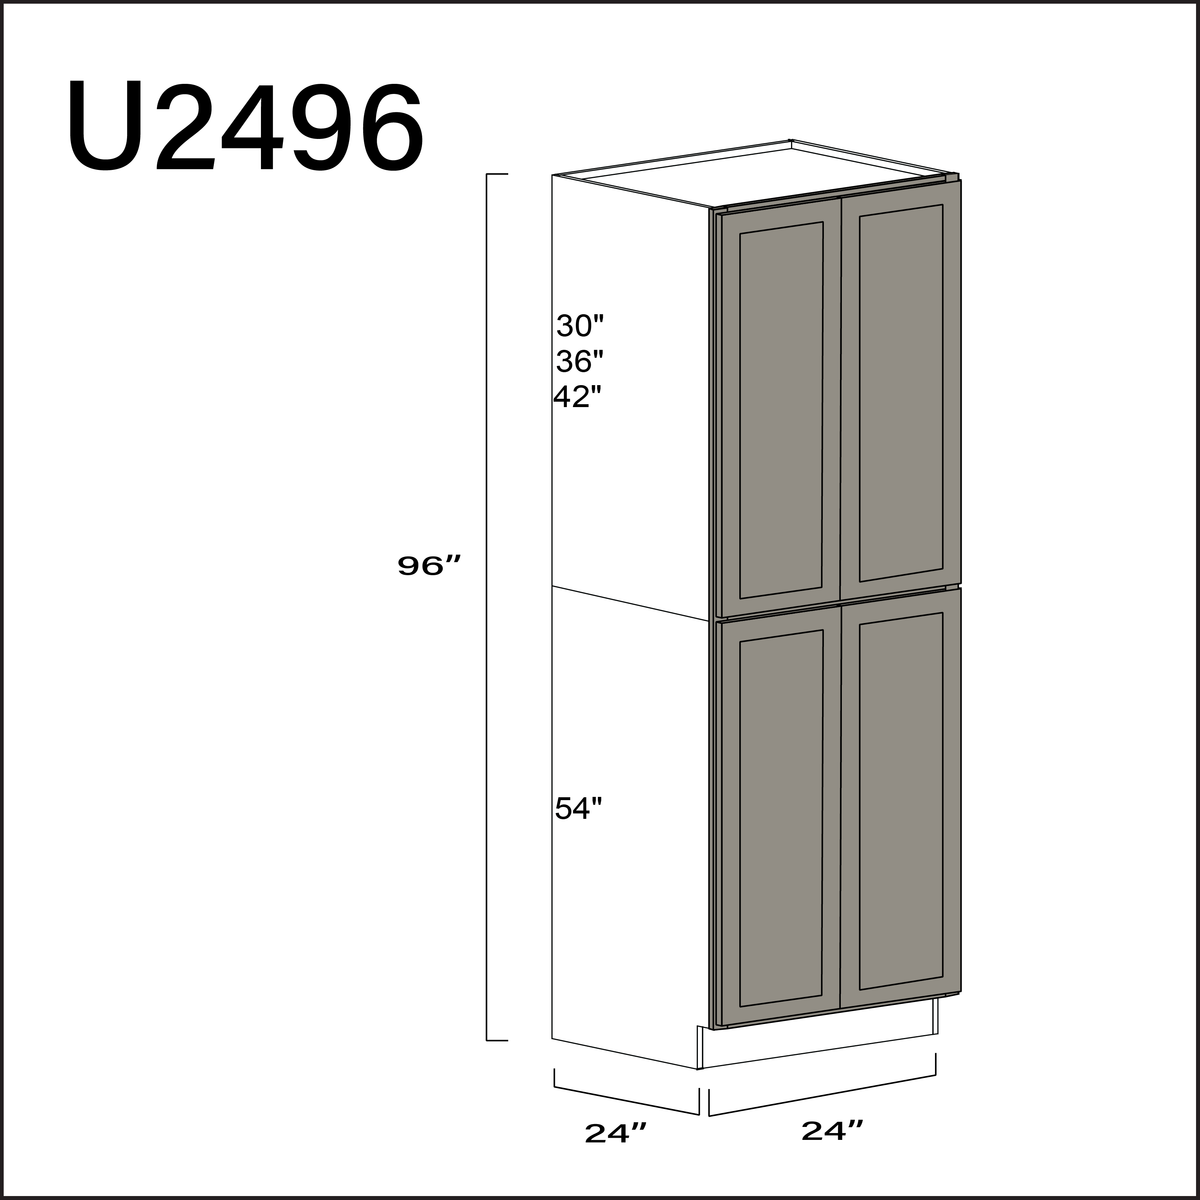 Alton Stone Gray Double Door Pantry Cabinet - 24" W x 96" H x 24" D